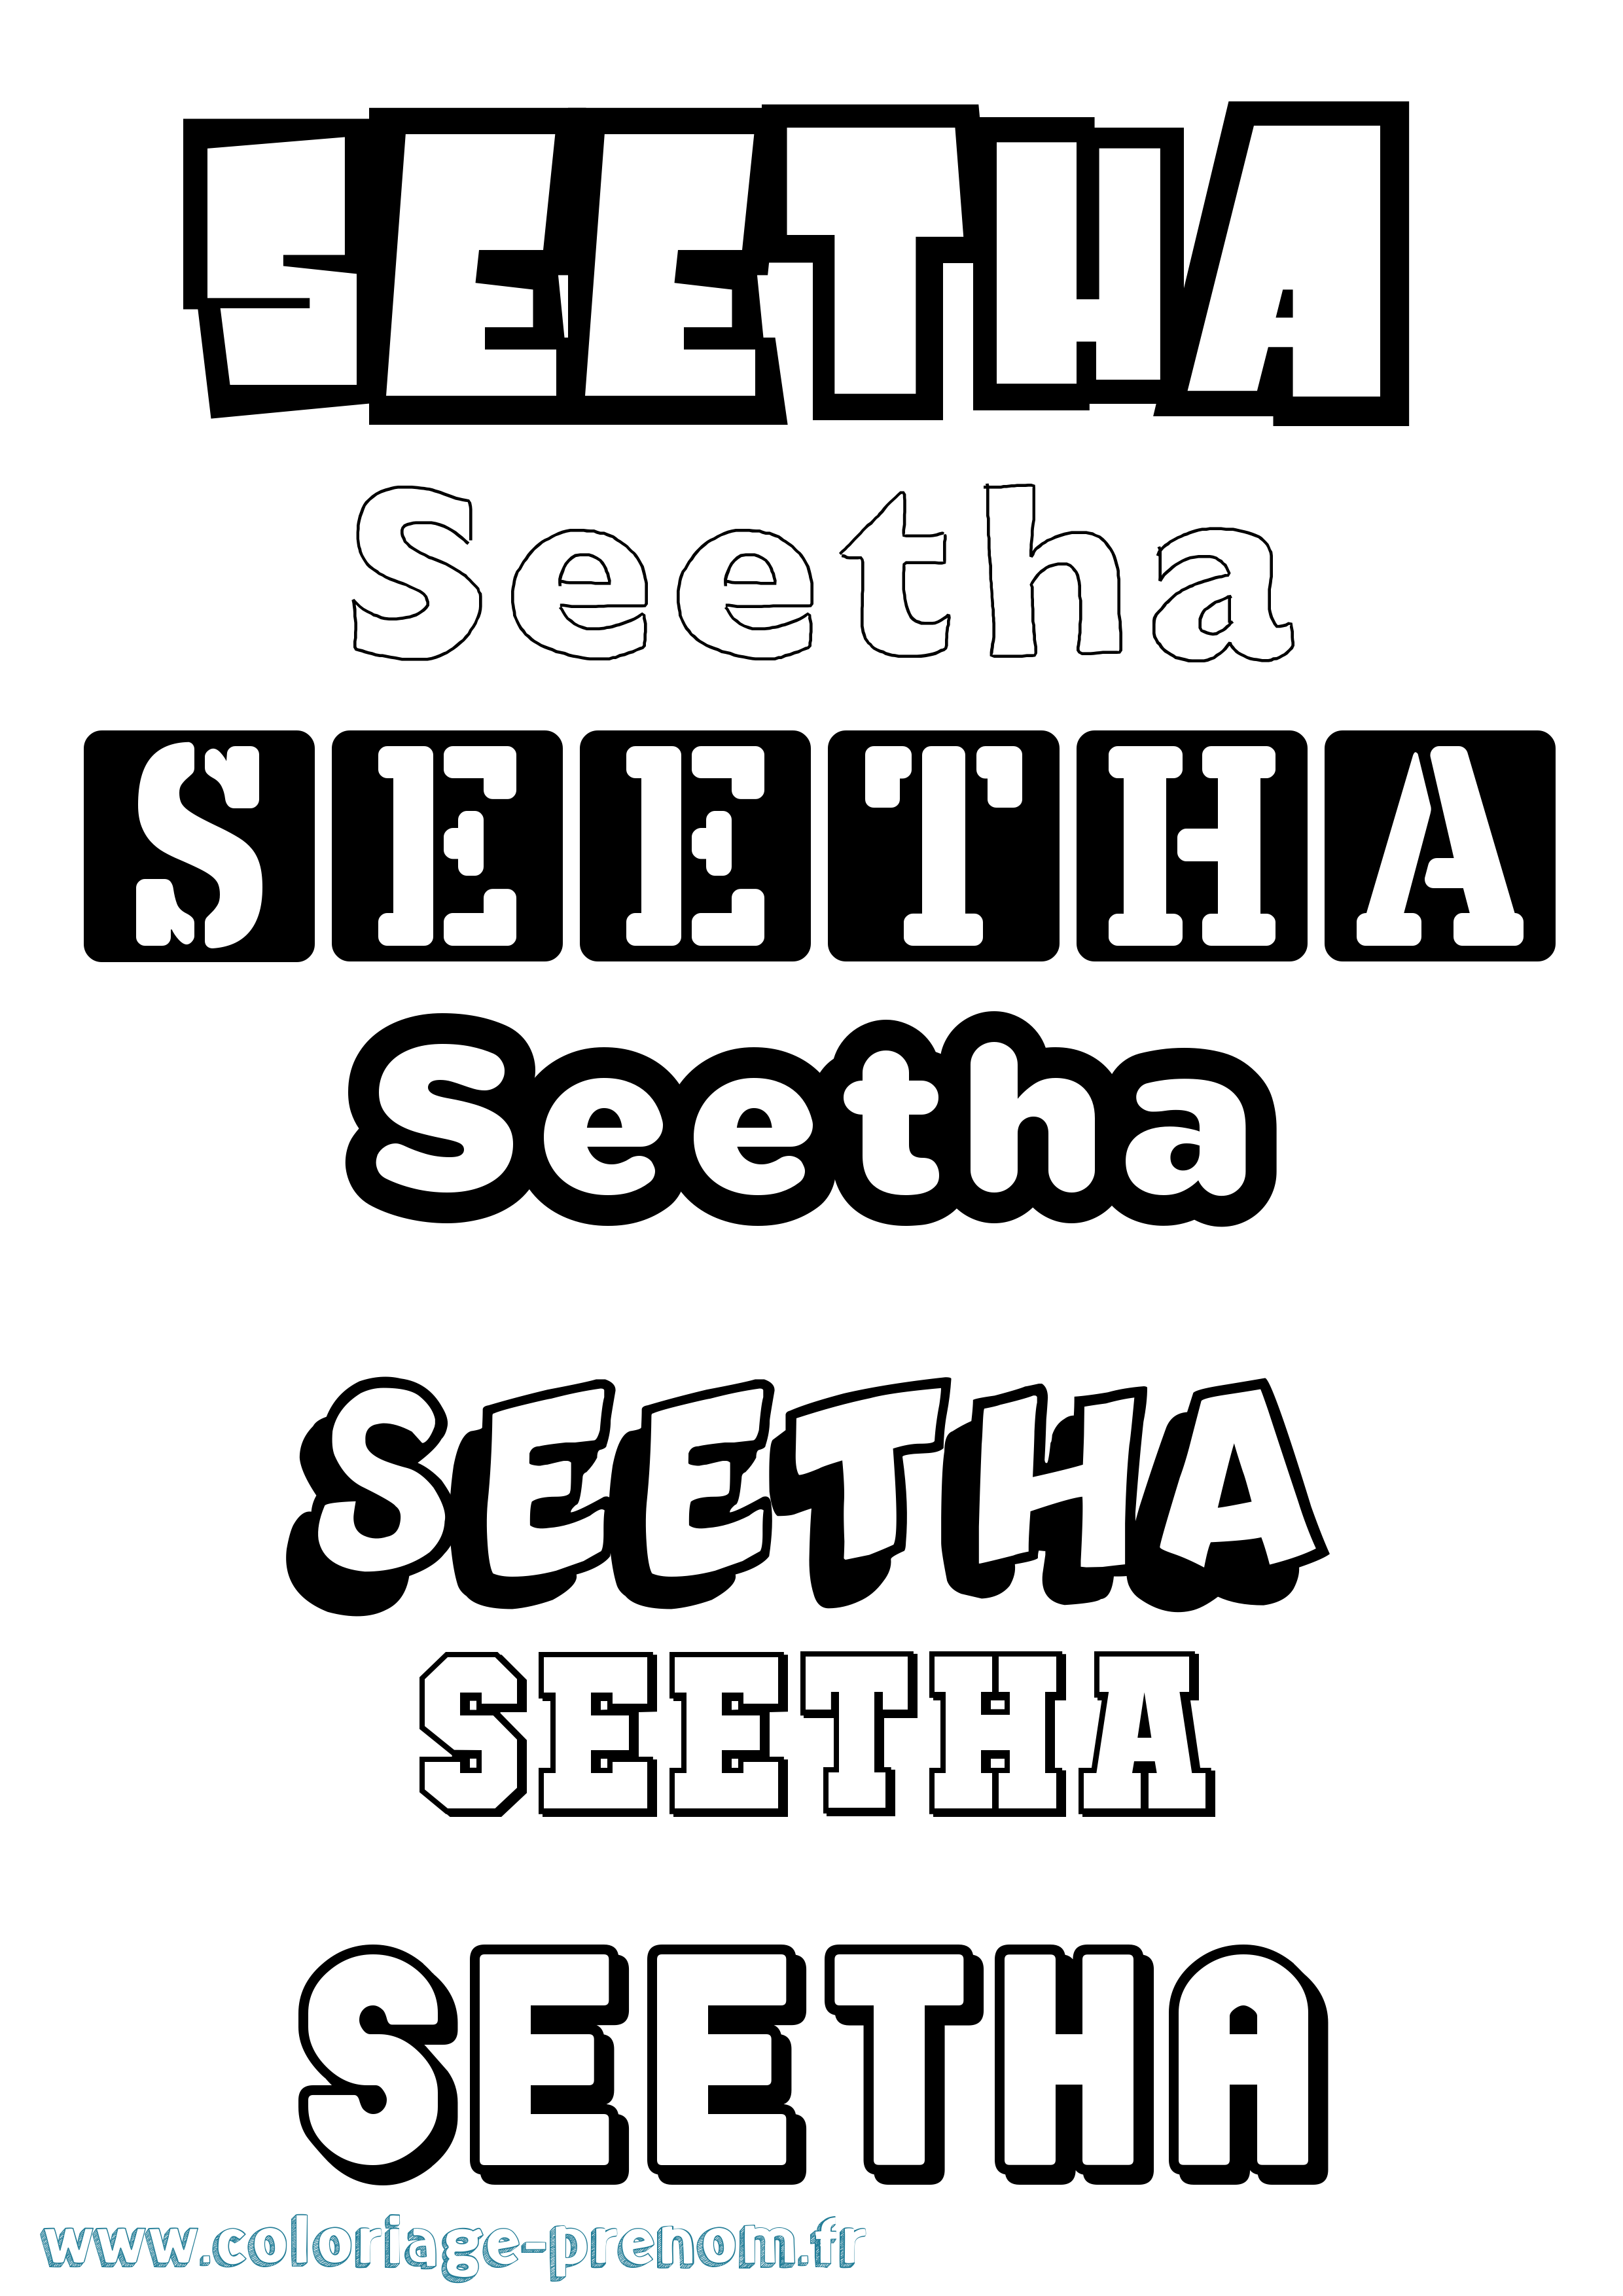 Coloriage prénom Seetha Simple